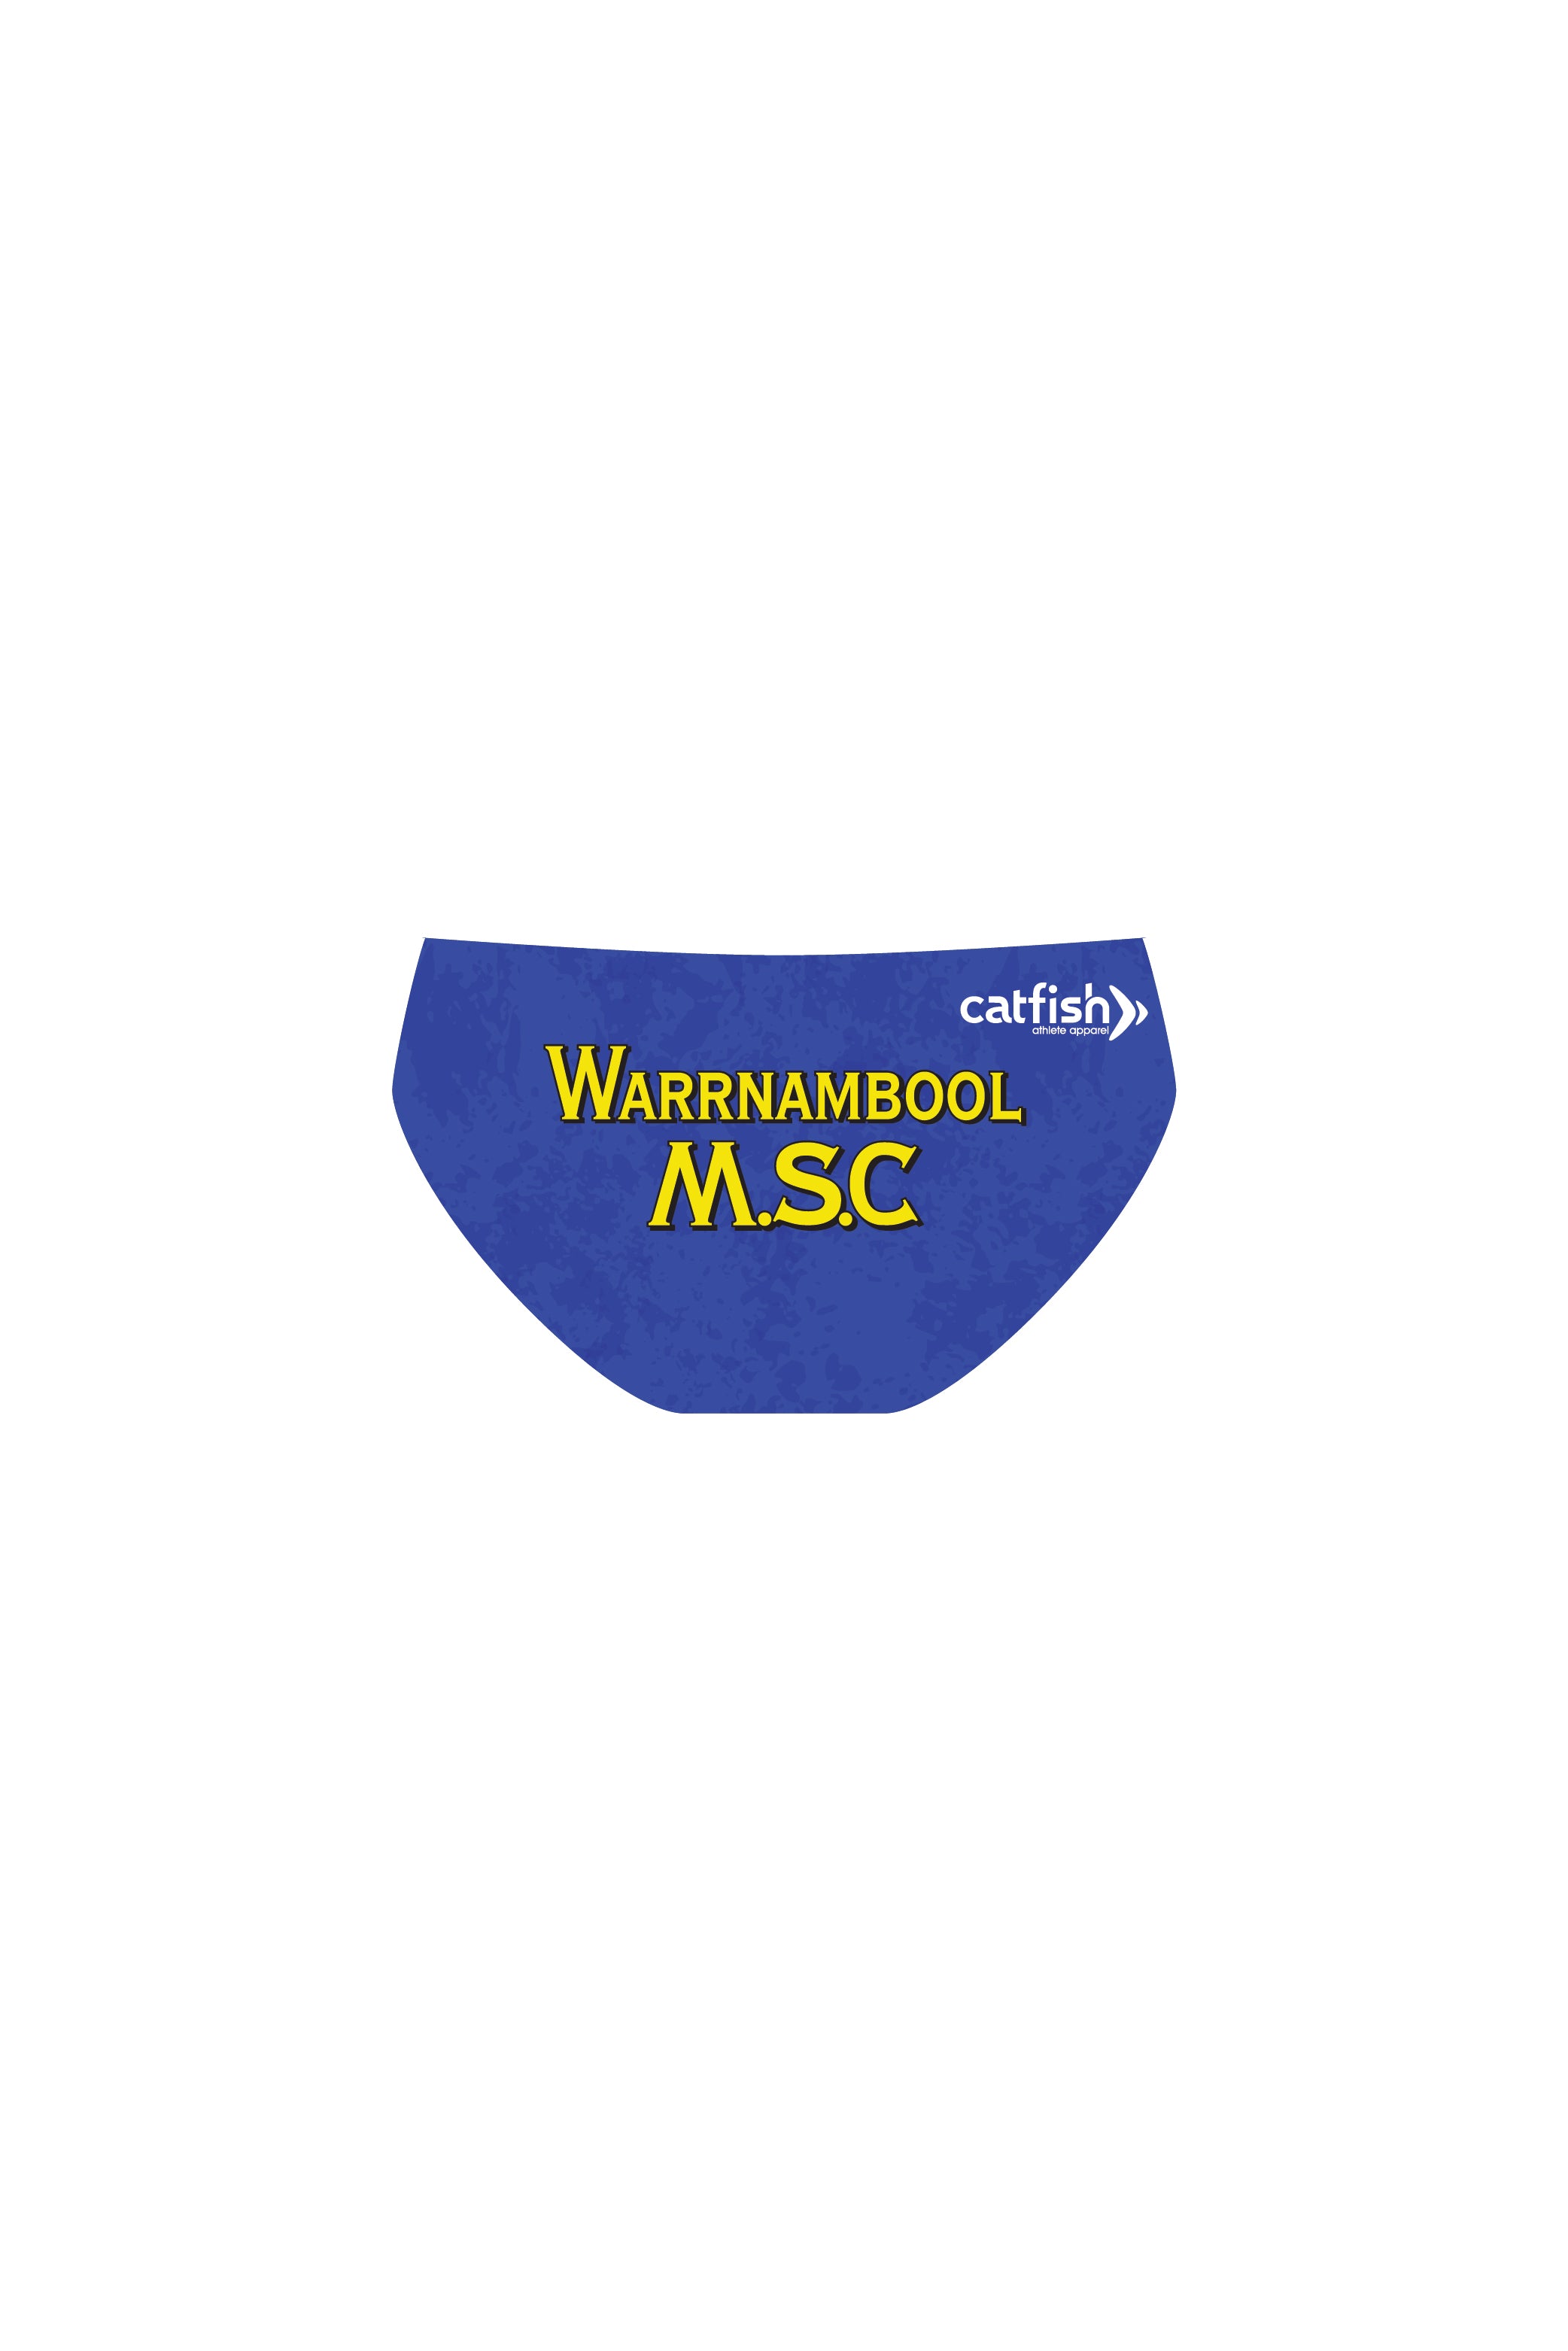 Warrnambool M.S.C Swimmers